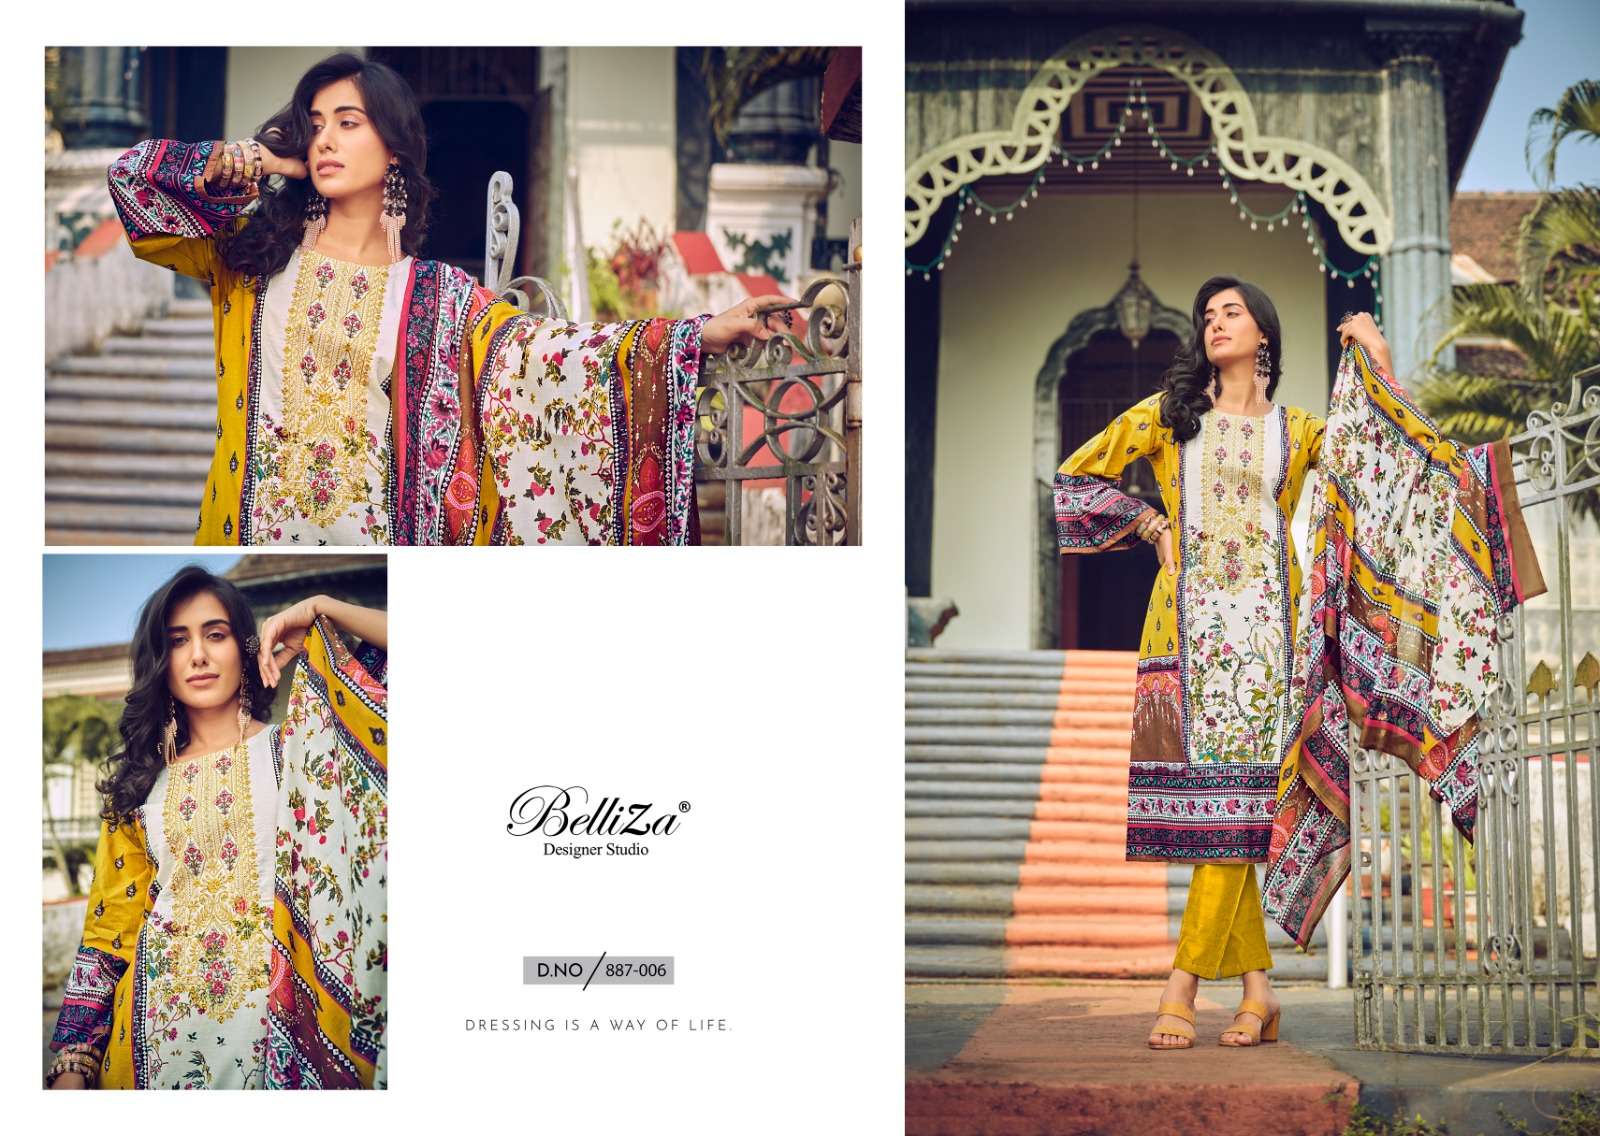 Belliza Naira Vol 38 Cotton Printed Dress Material Wholesale catalog